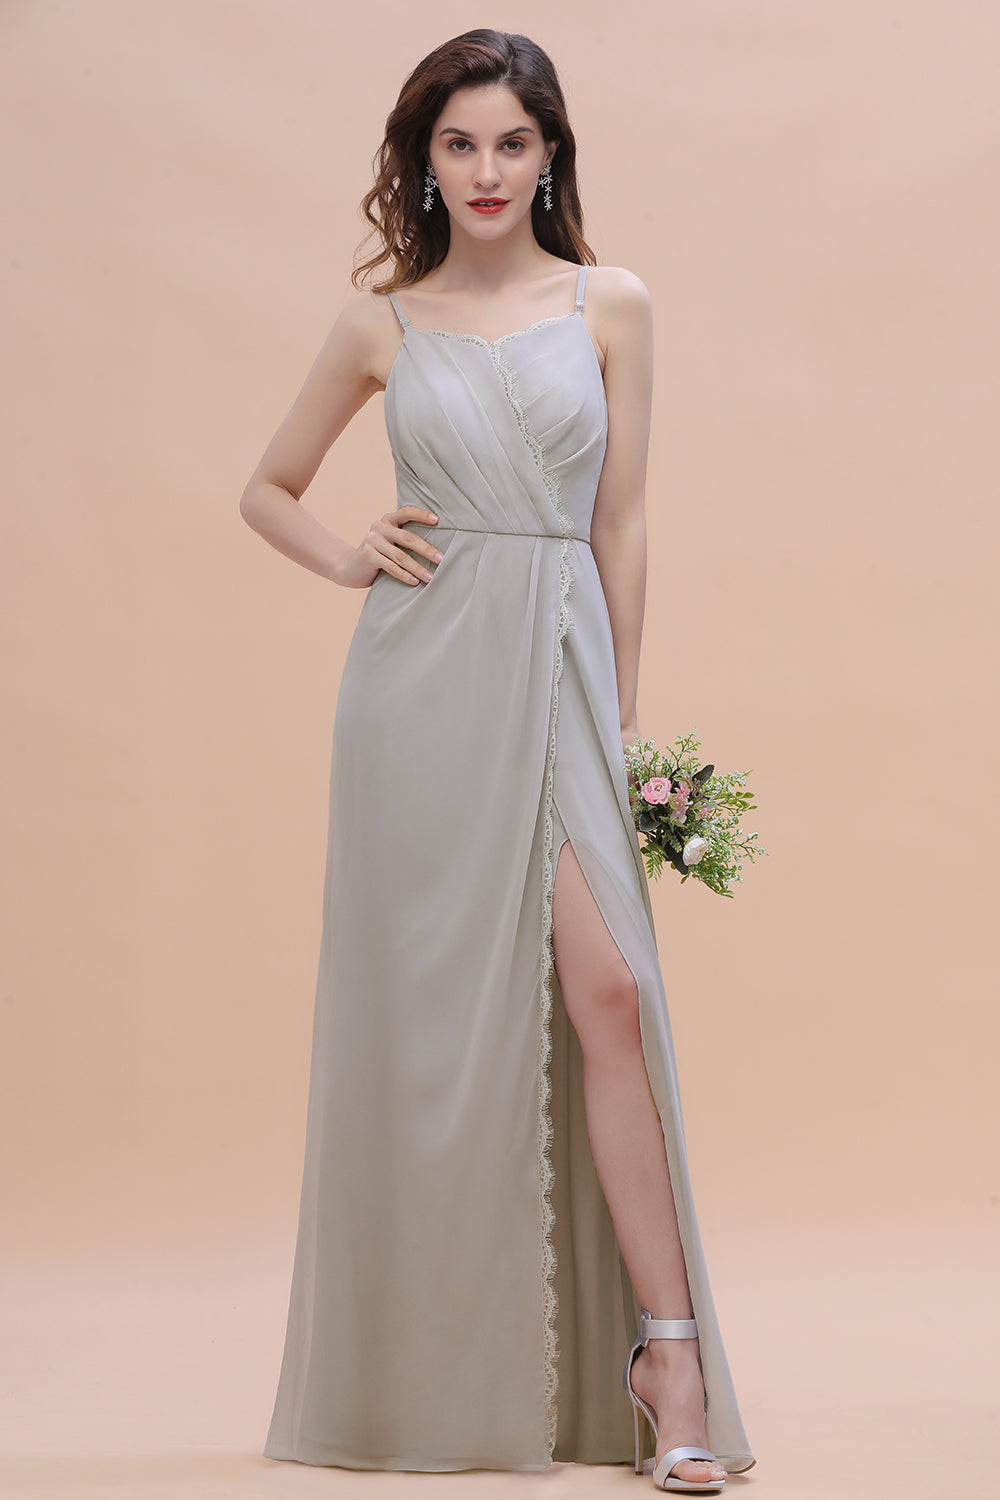 Chic Spaghetti Straps Chiffon Lace A-Line Bridesmaid Dress On Sale